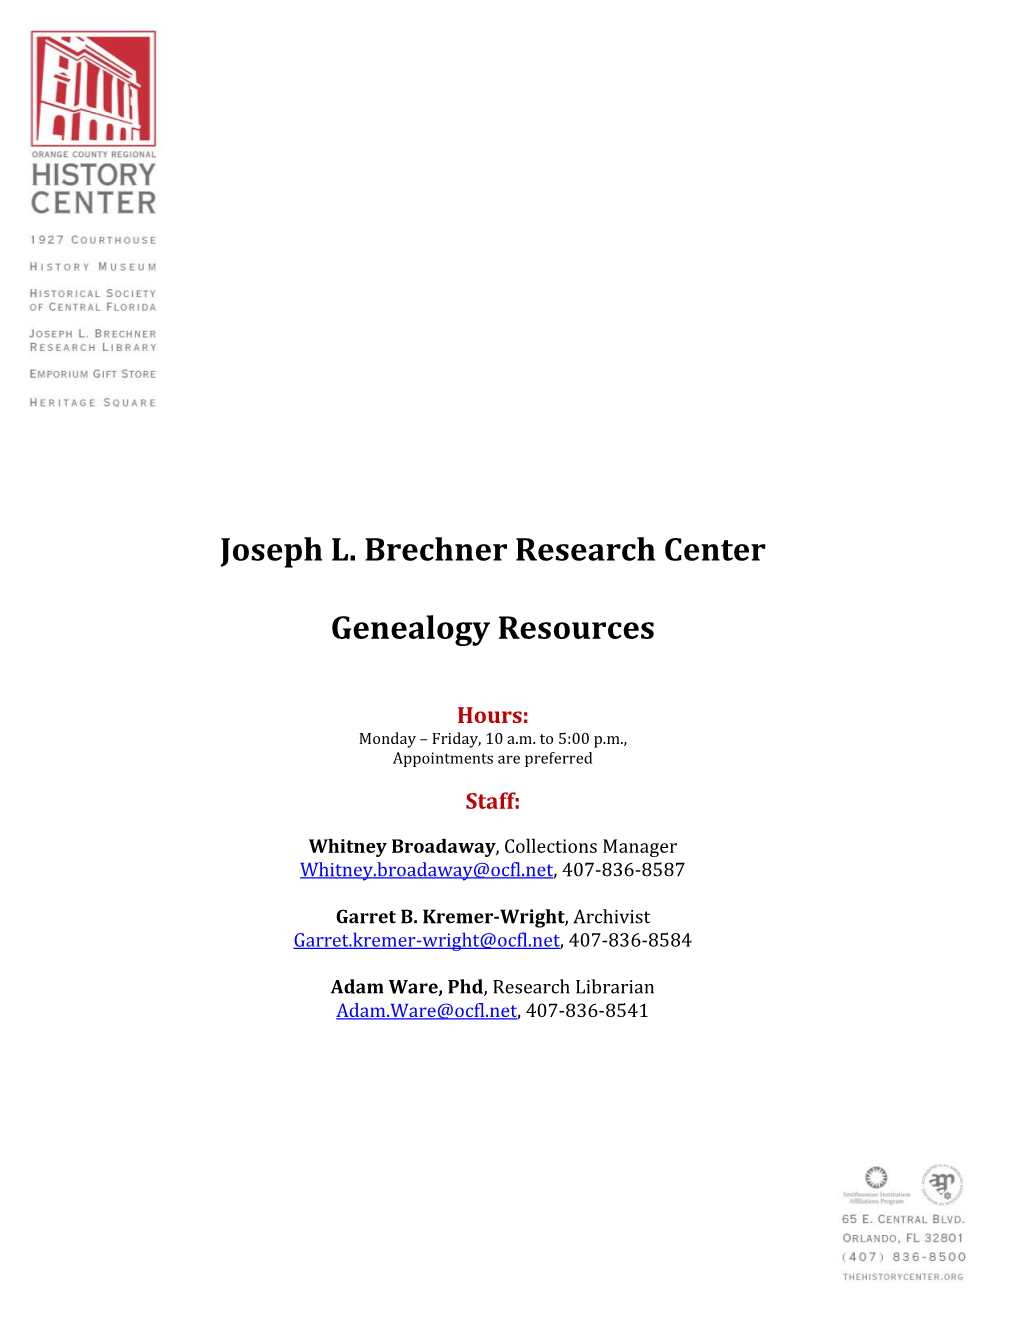 Joseph L. Brechner Research Center Genealogy Resources